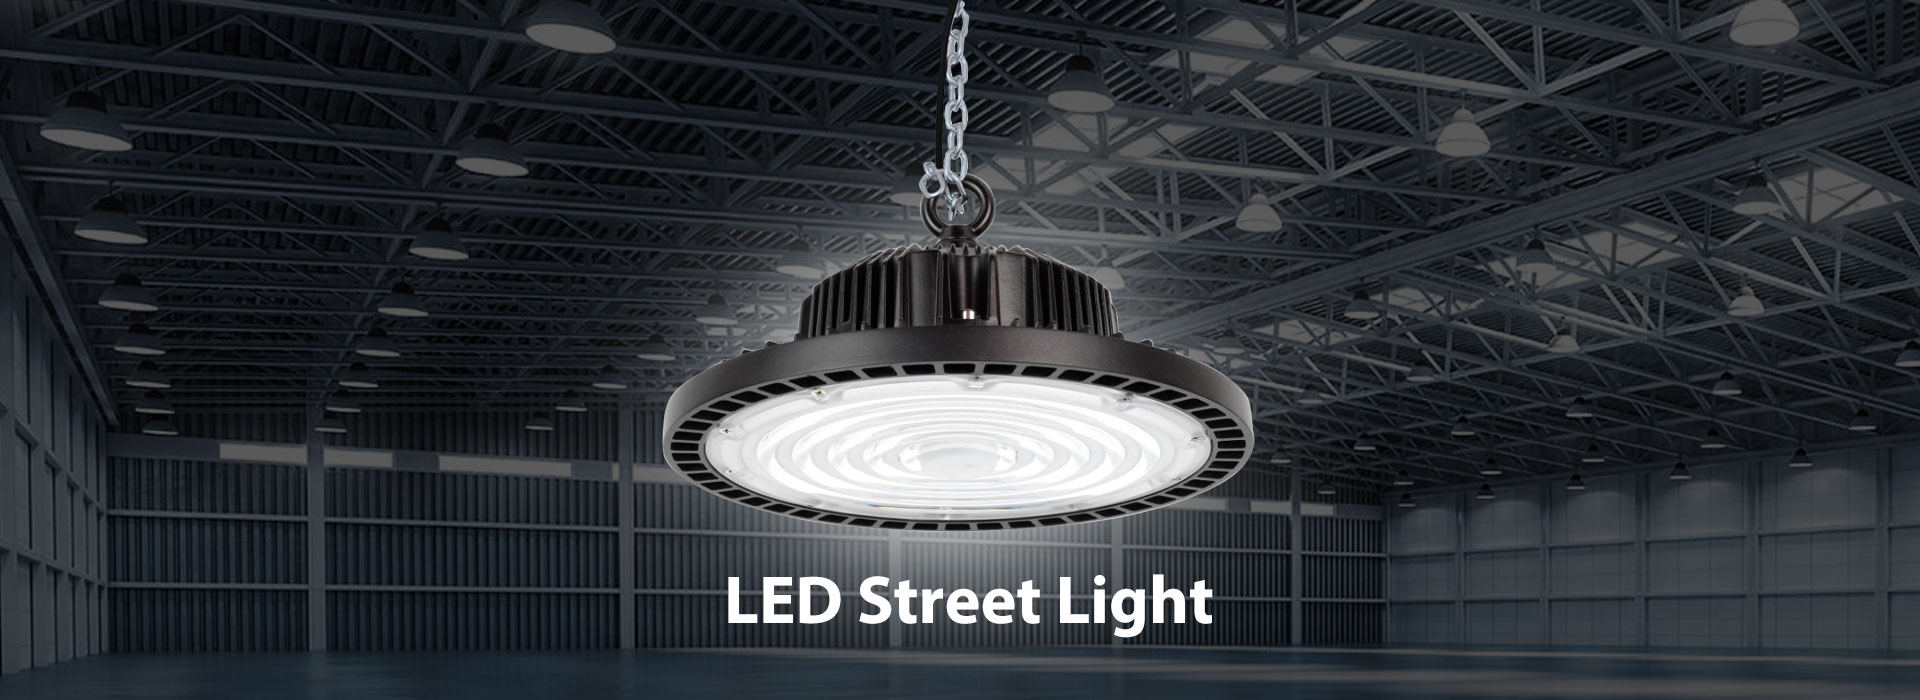 China LED Street Light Factory